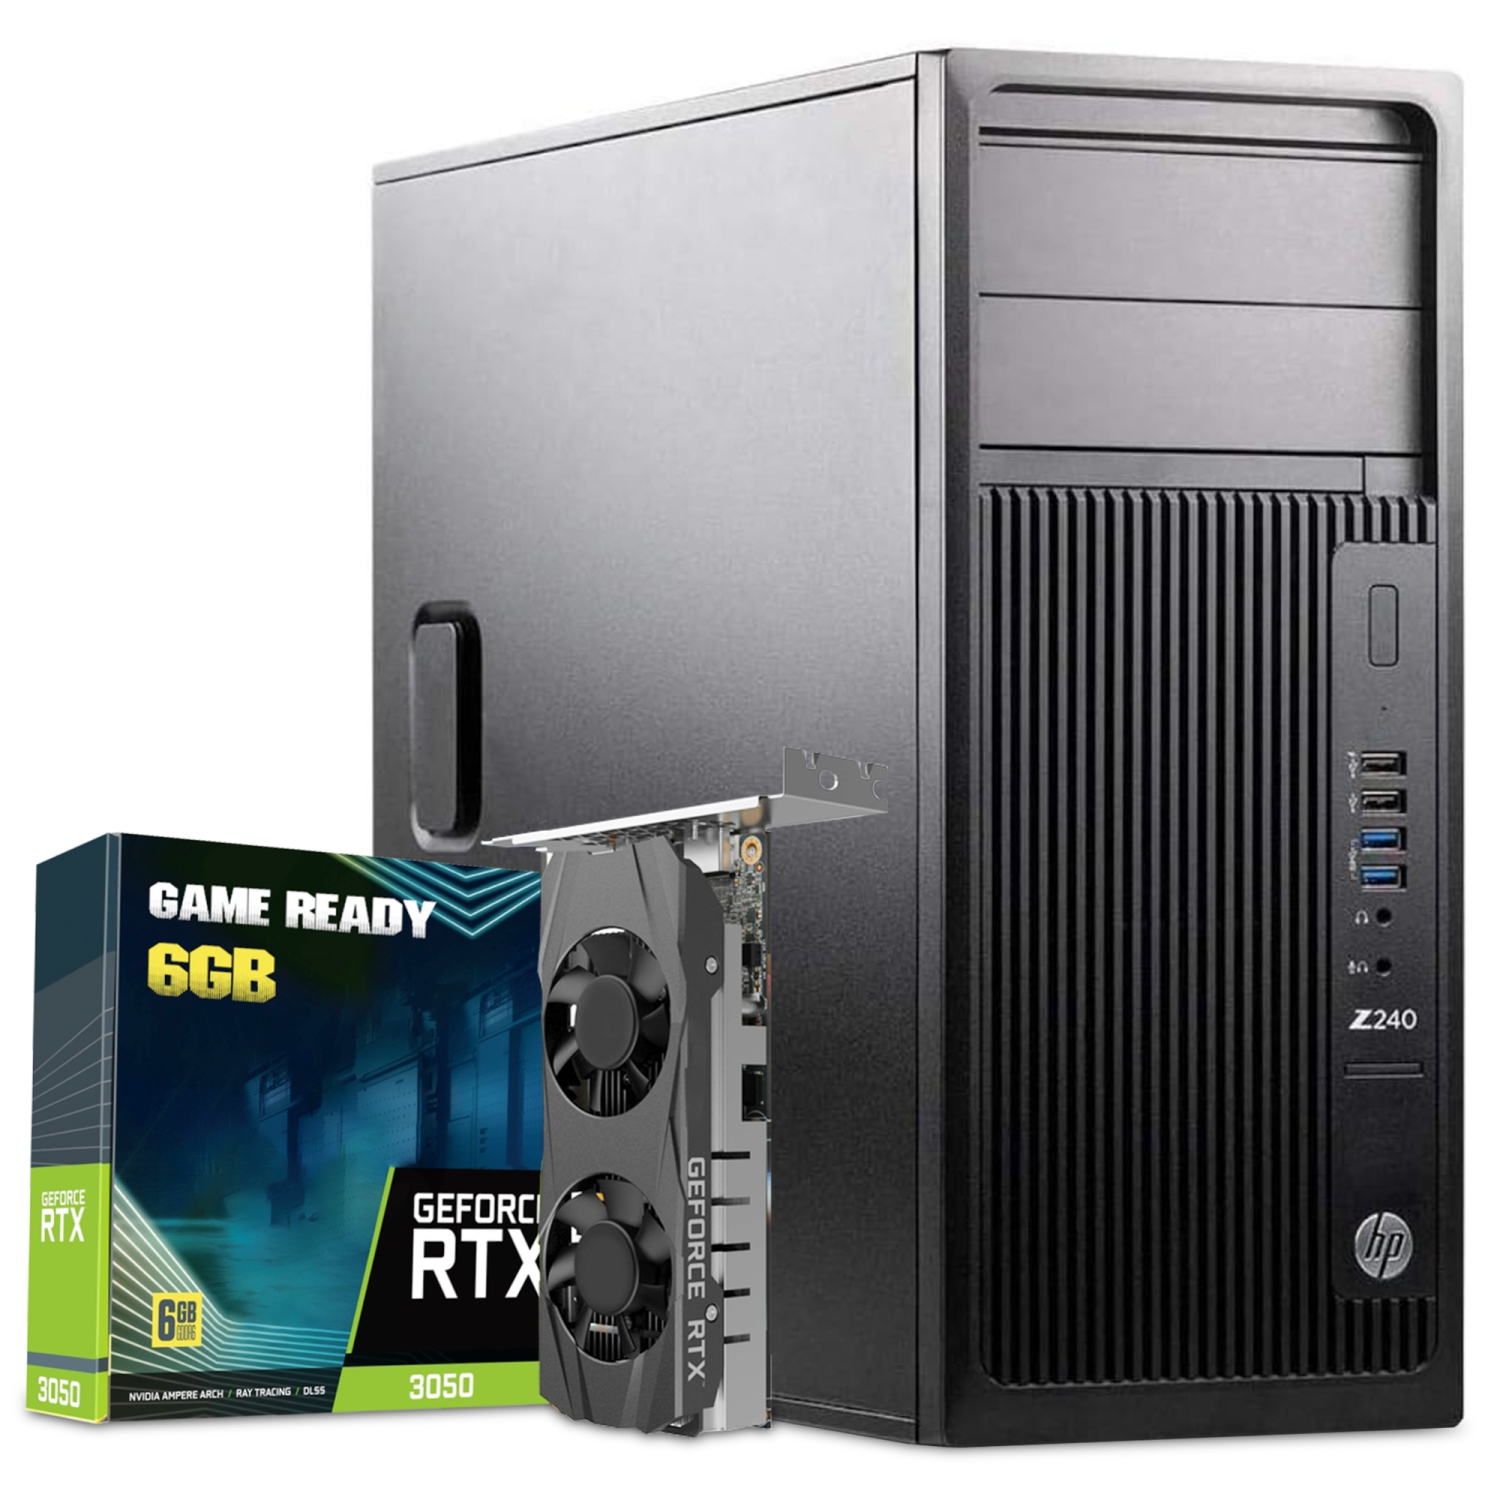 Refurbished (Good) - Gaming PC HP Z240 Workstation Desktop Computer, GeForce RTX 3050 6GB GDDR6 HDMI, Intel Core i5 Processor, 16GB DDR4 RAM, 1TB SSD, 2TB HDD, Windows 10 Pro, WIFI